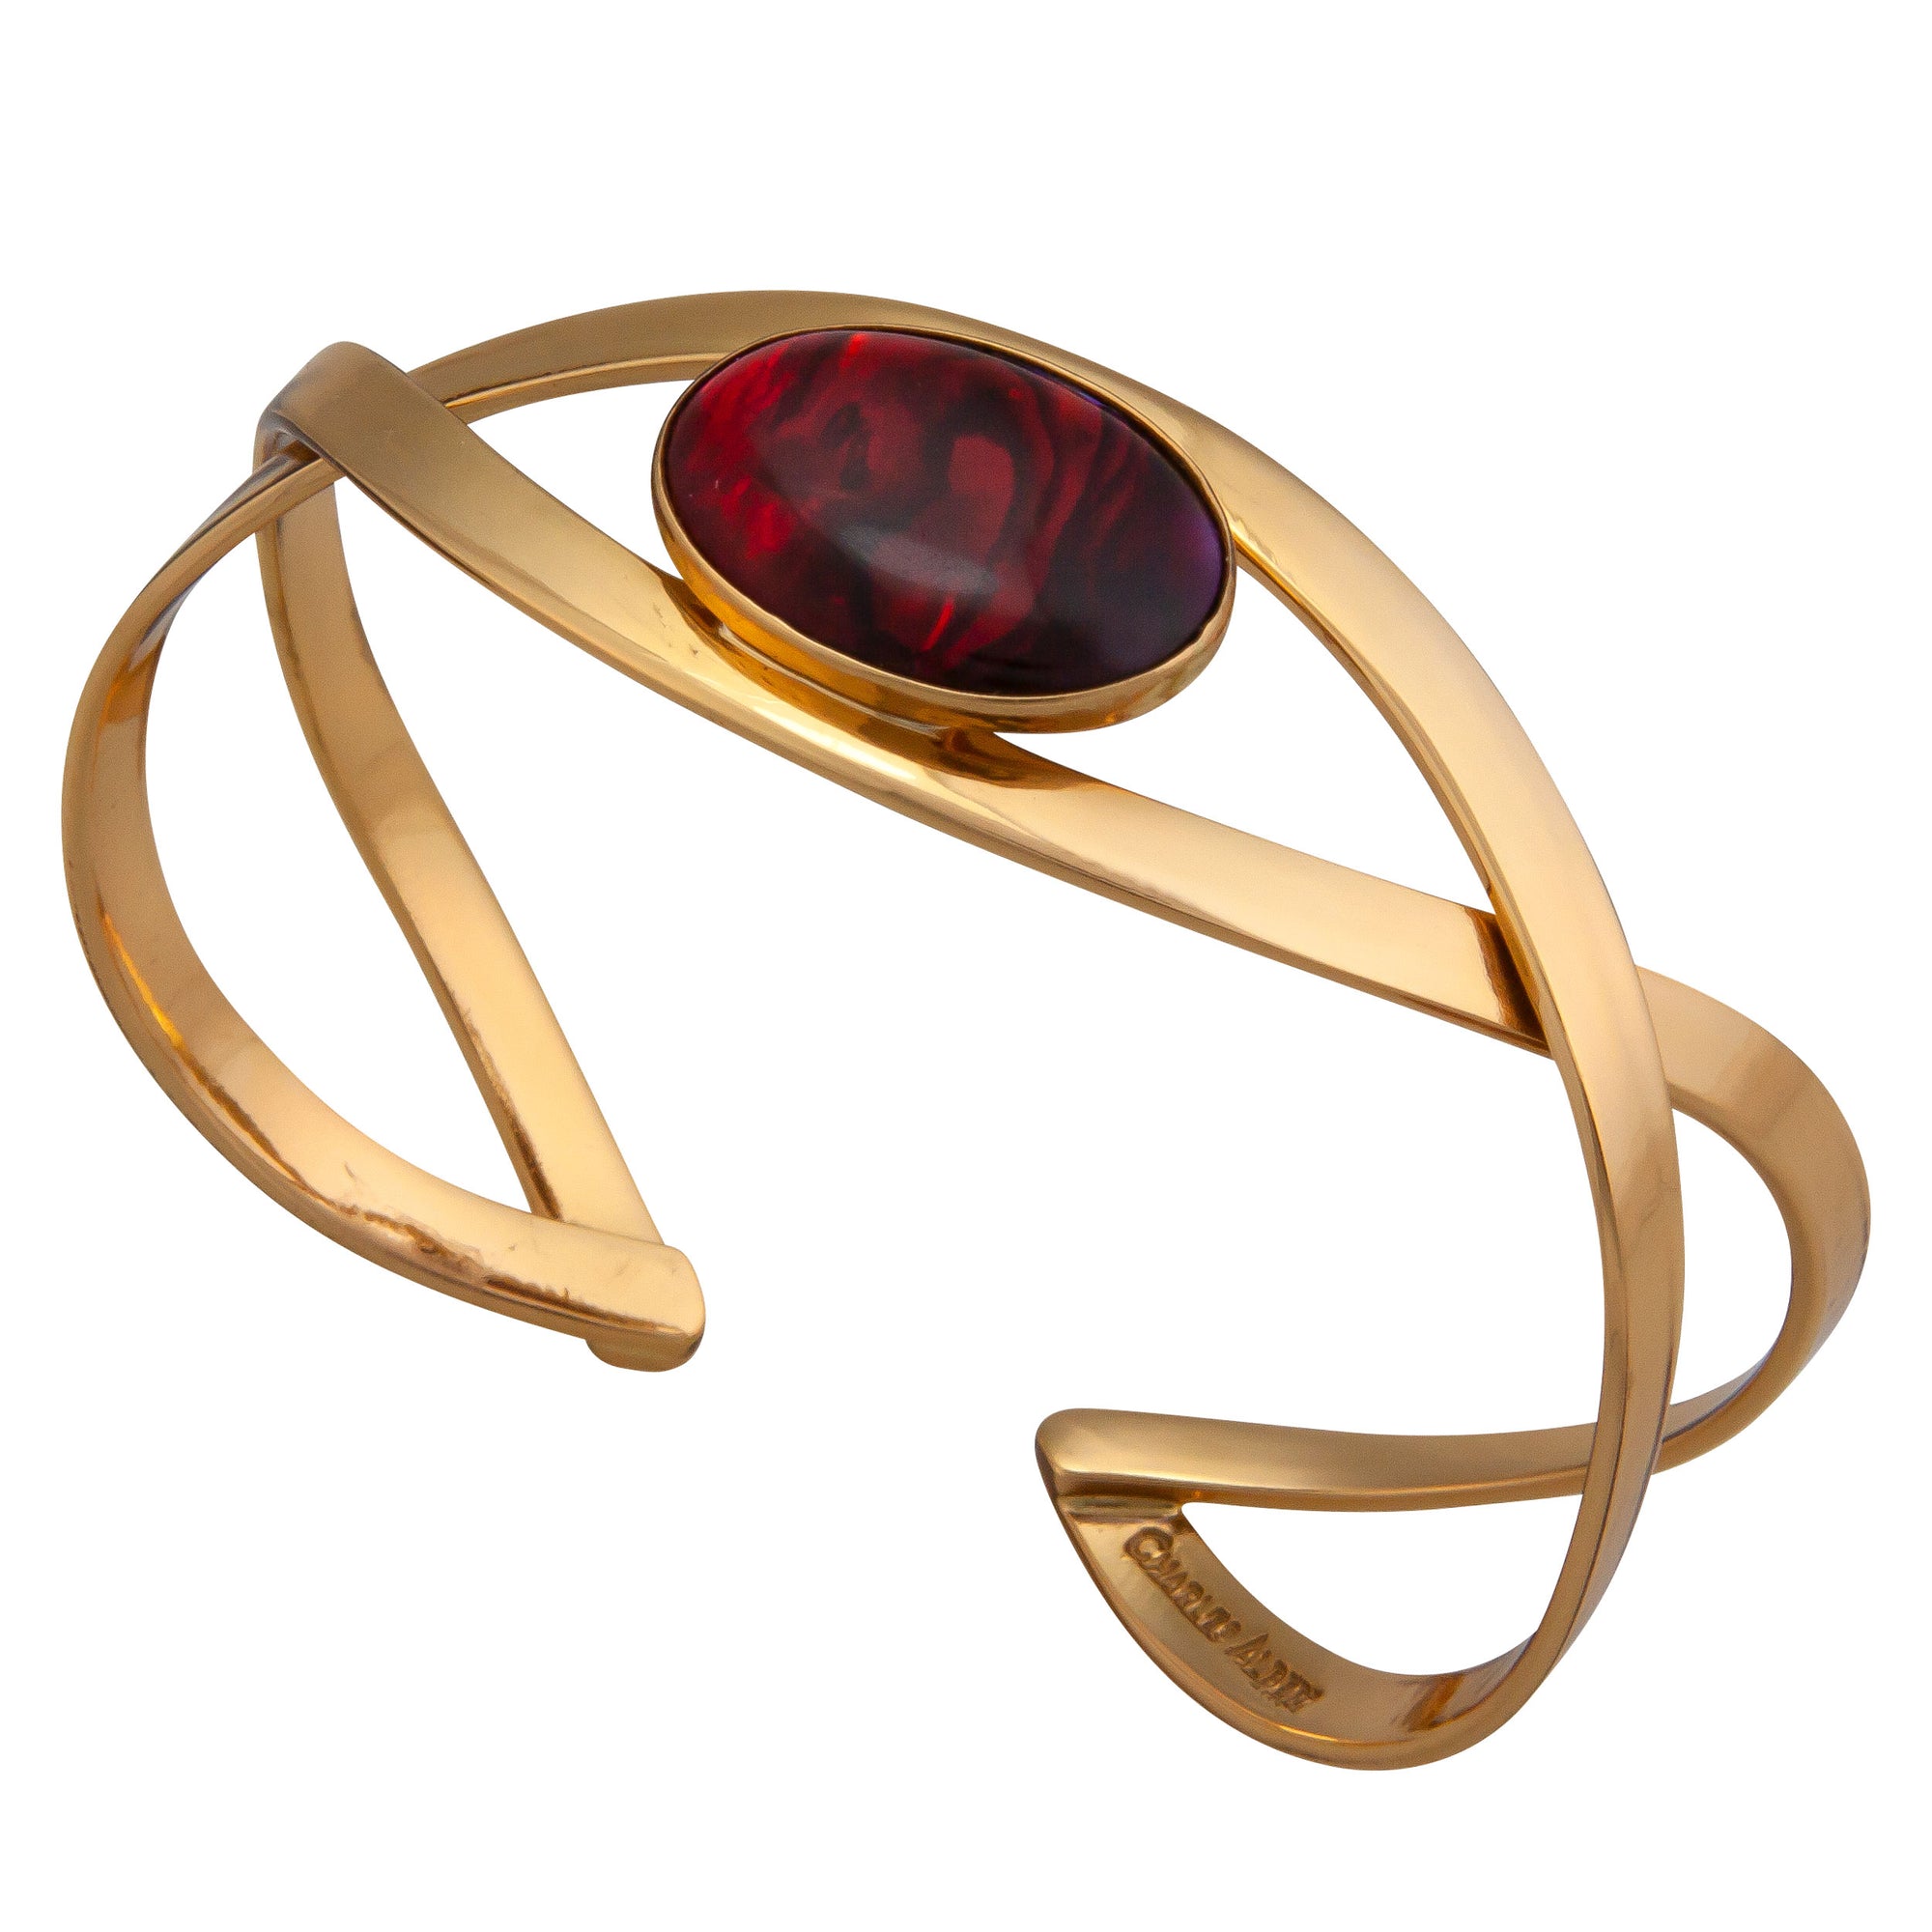 Charles Albert Jewelry - Alchemia Red Abalone Infinity Cuff Bracelet - Side View